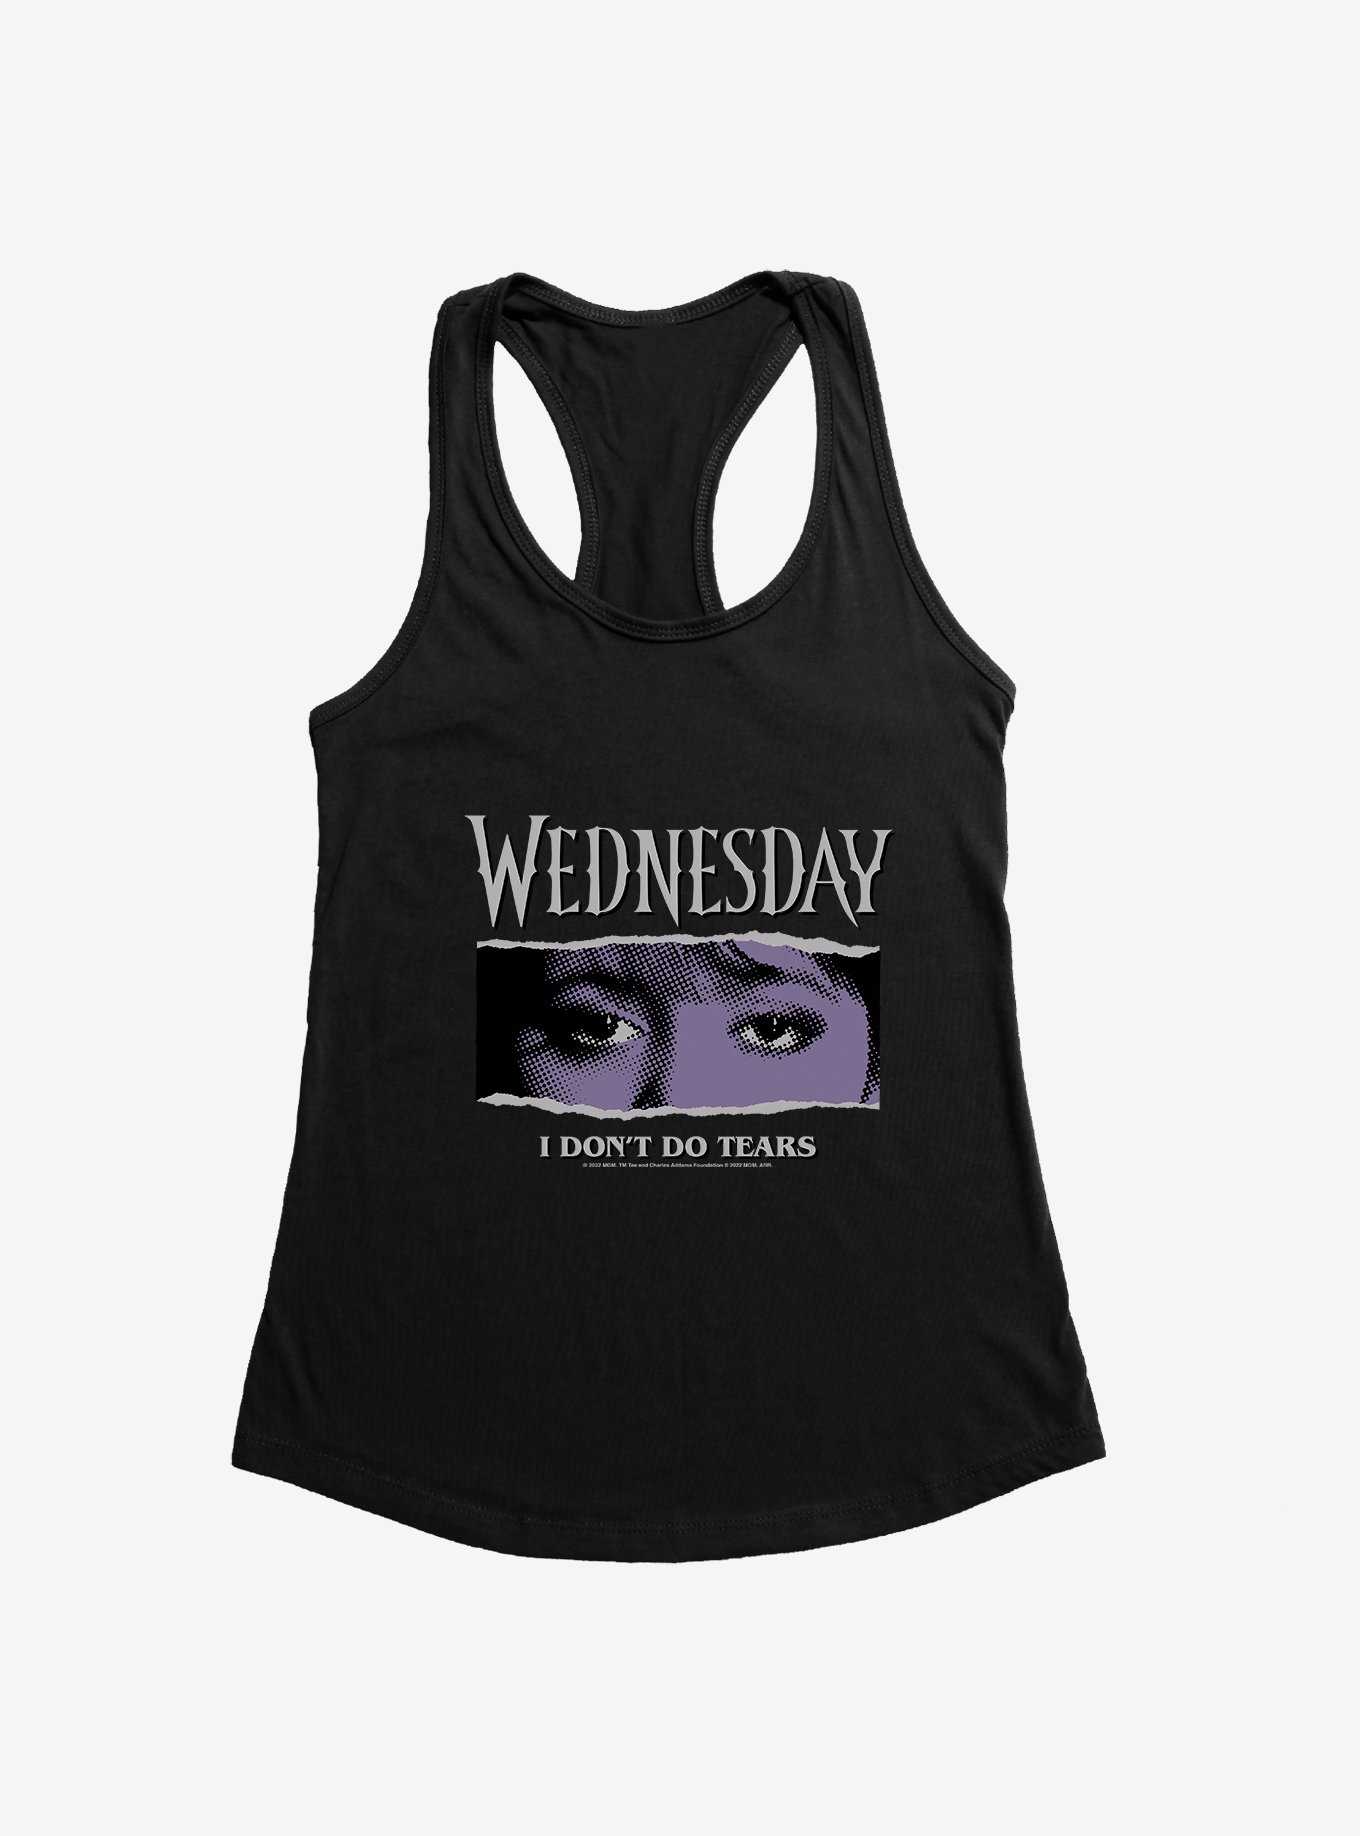 Wednesday Eyes Don't Do Tears Girls Tank, , hi-res